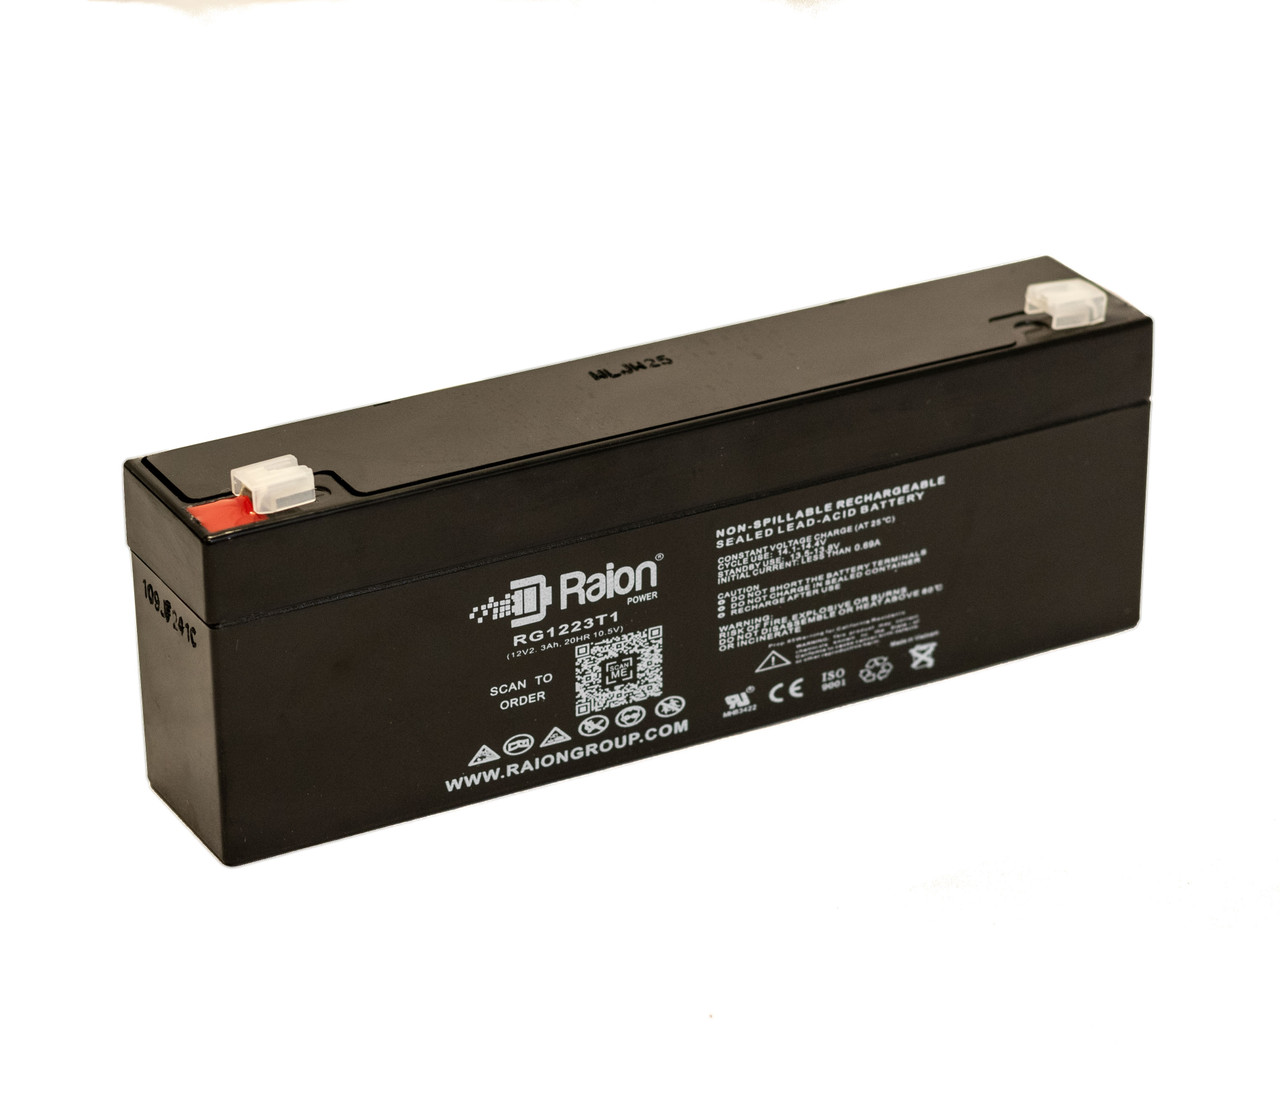 Raion Power RG1223T1 Replacement Battery for Peak Energy PK12V2.6F1